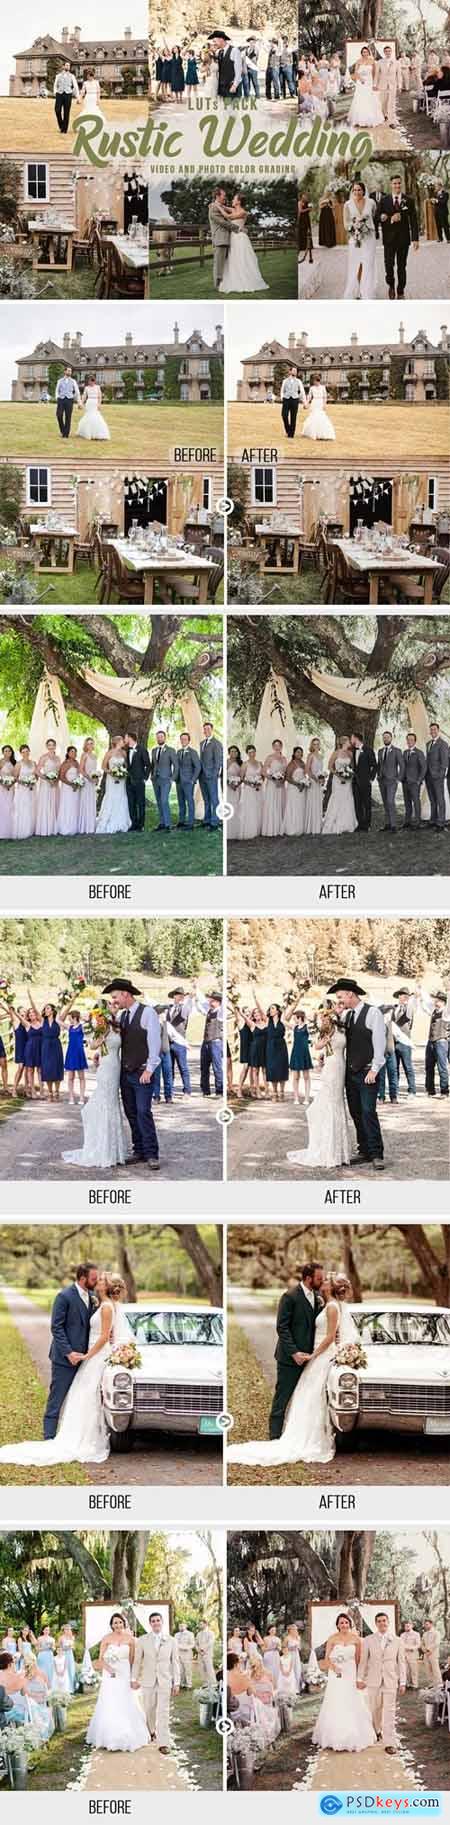 Rustic Wedding LUTs - Video Color Grading Filters